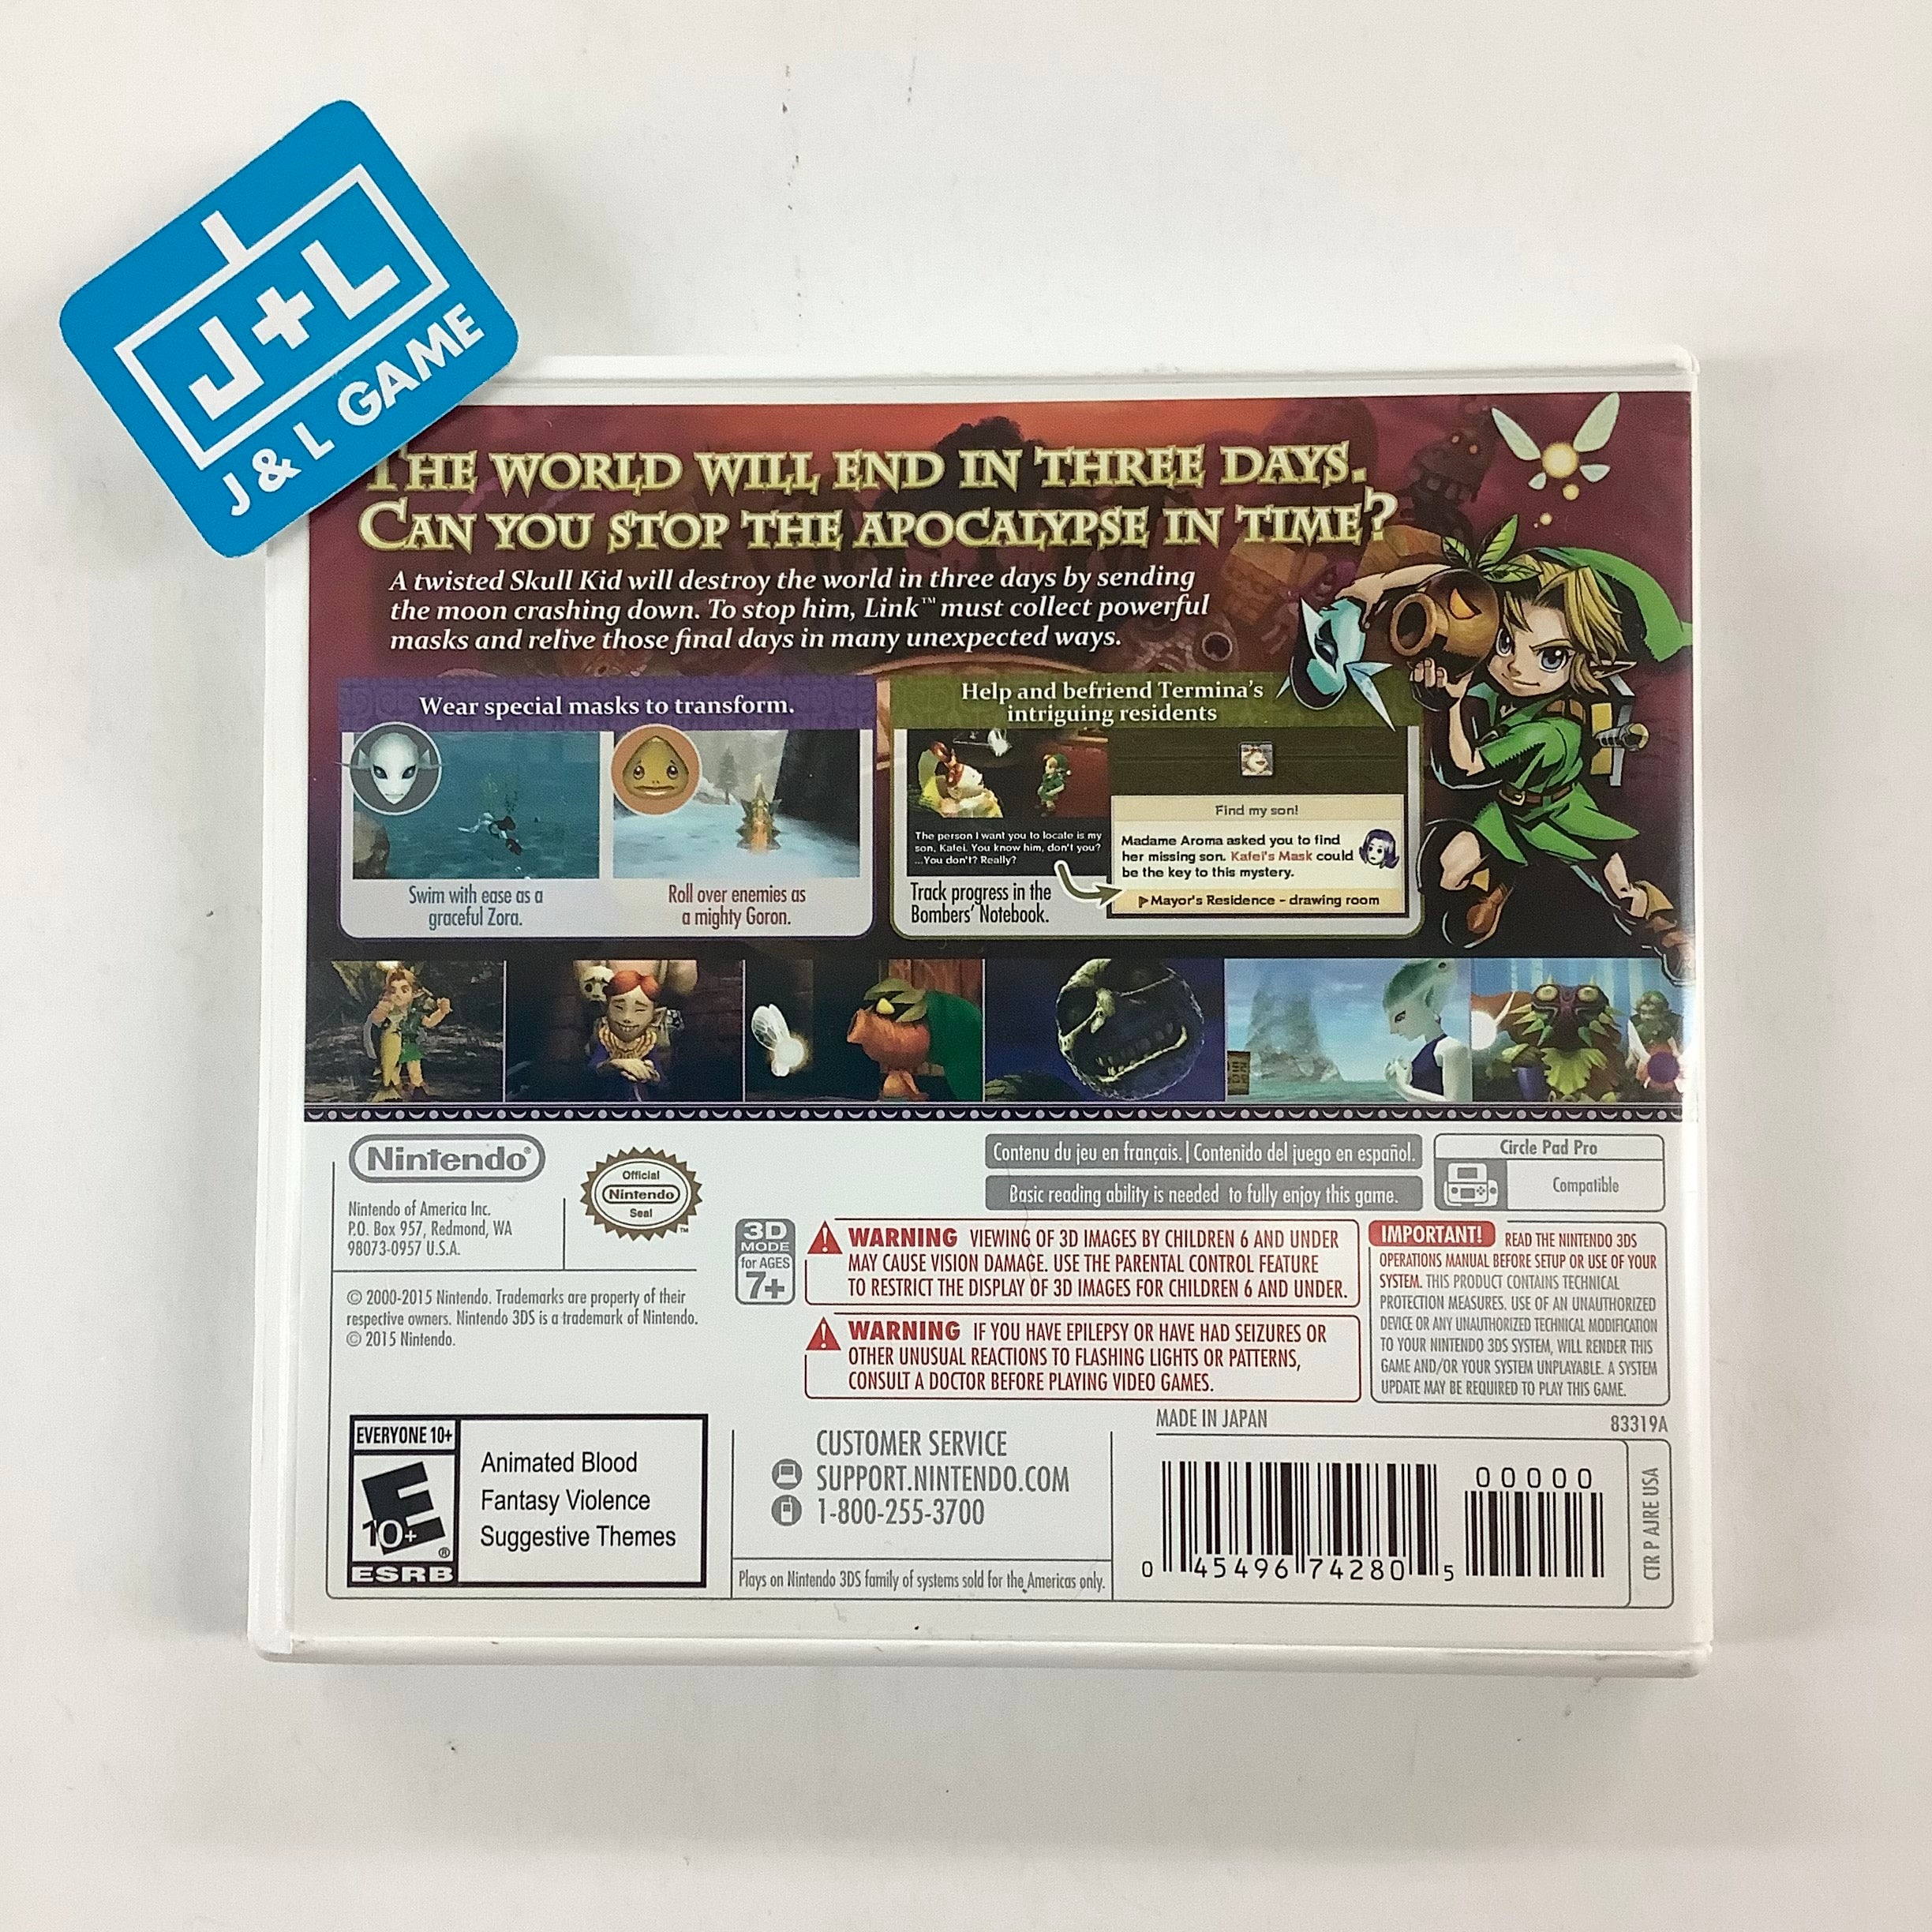 The Legend of Zelda: Majora's Mask 3D - Nintendo 3DS [Pre-Owned] Video Games Nintendo   